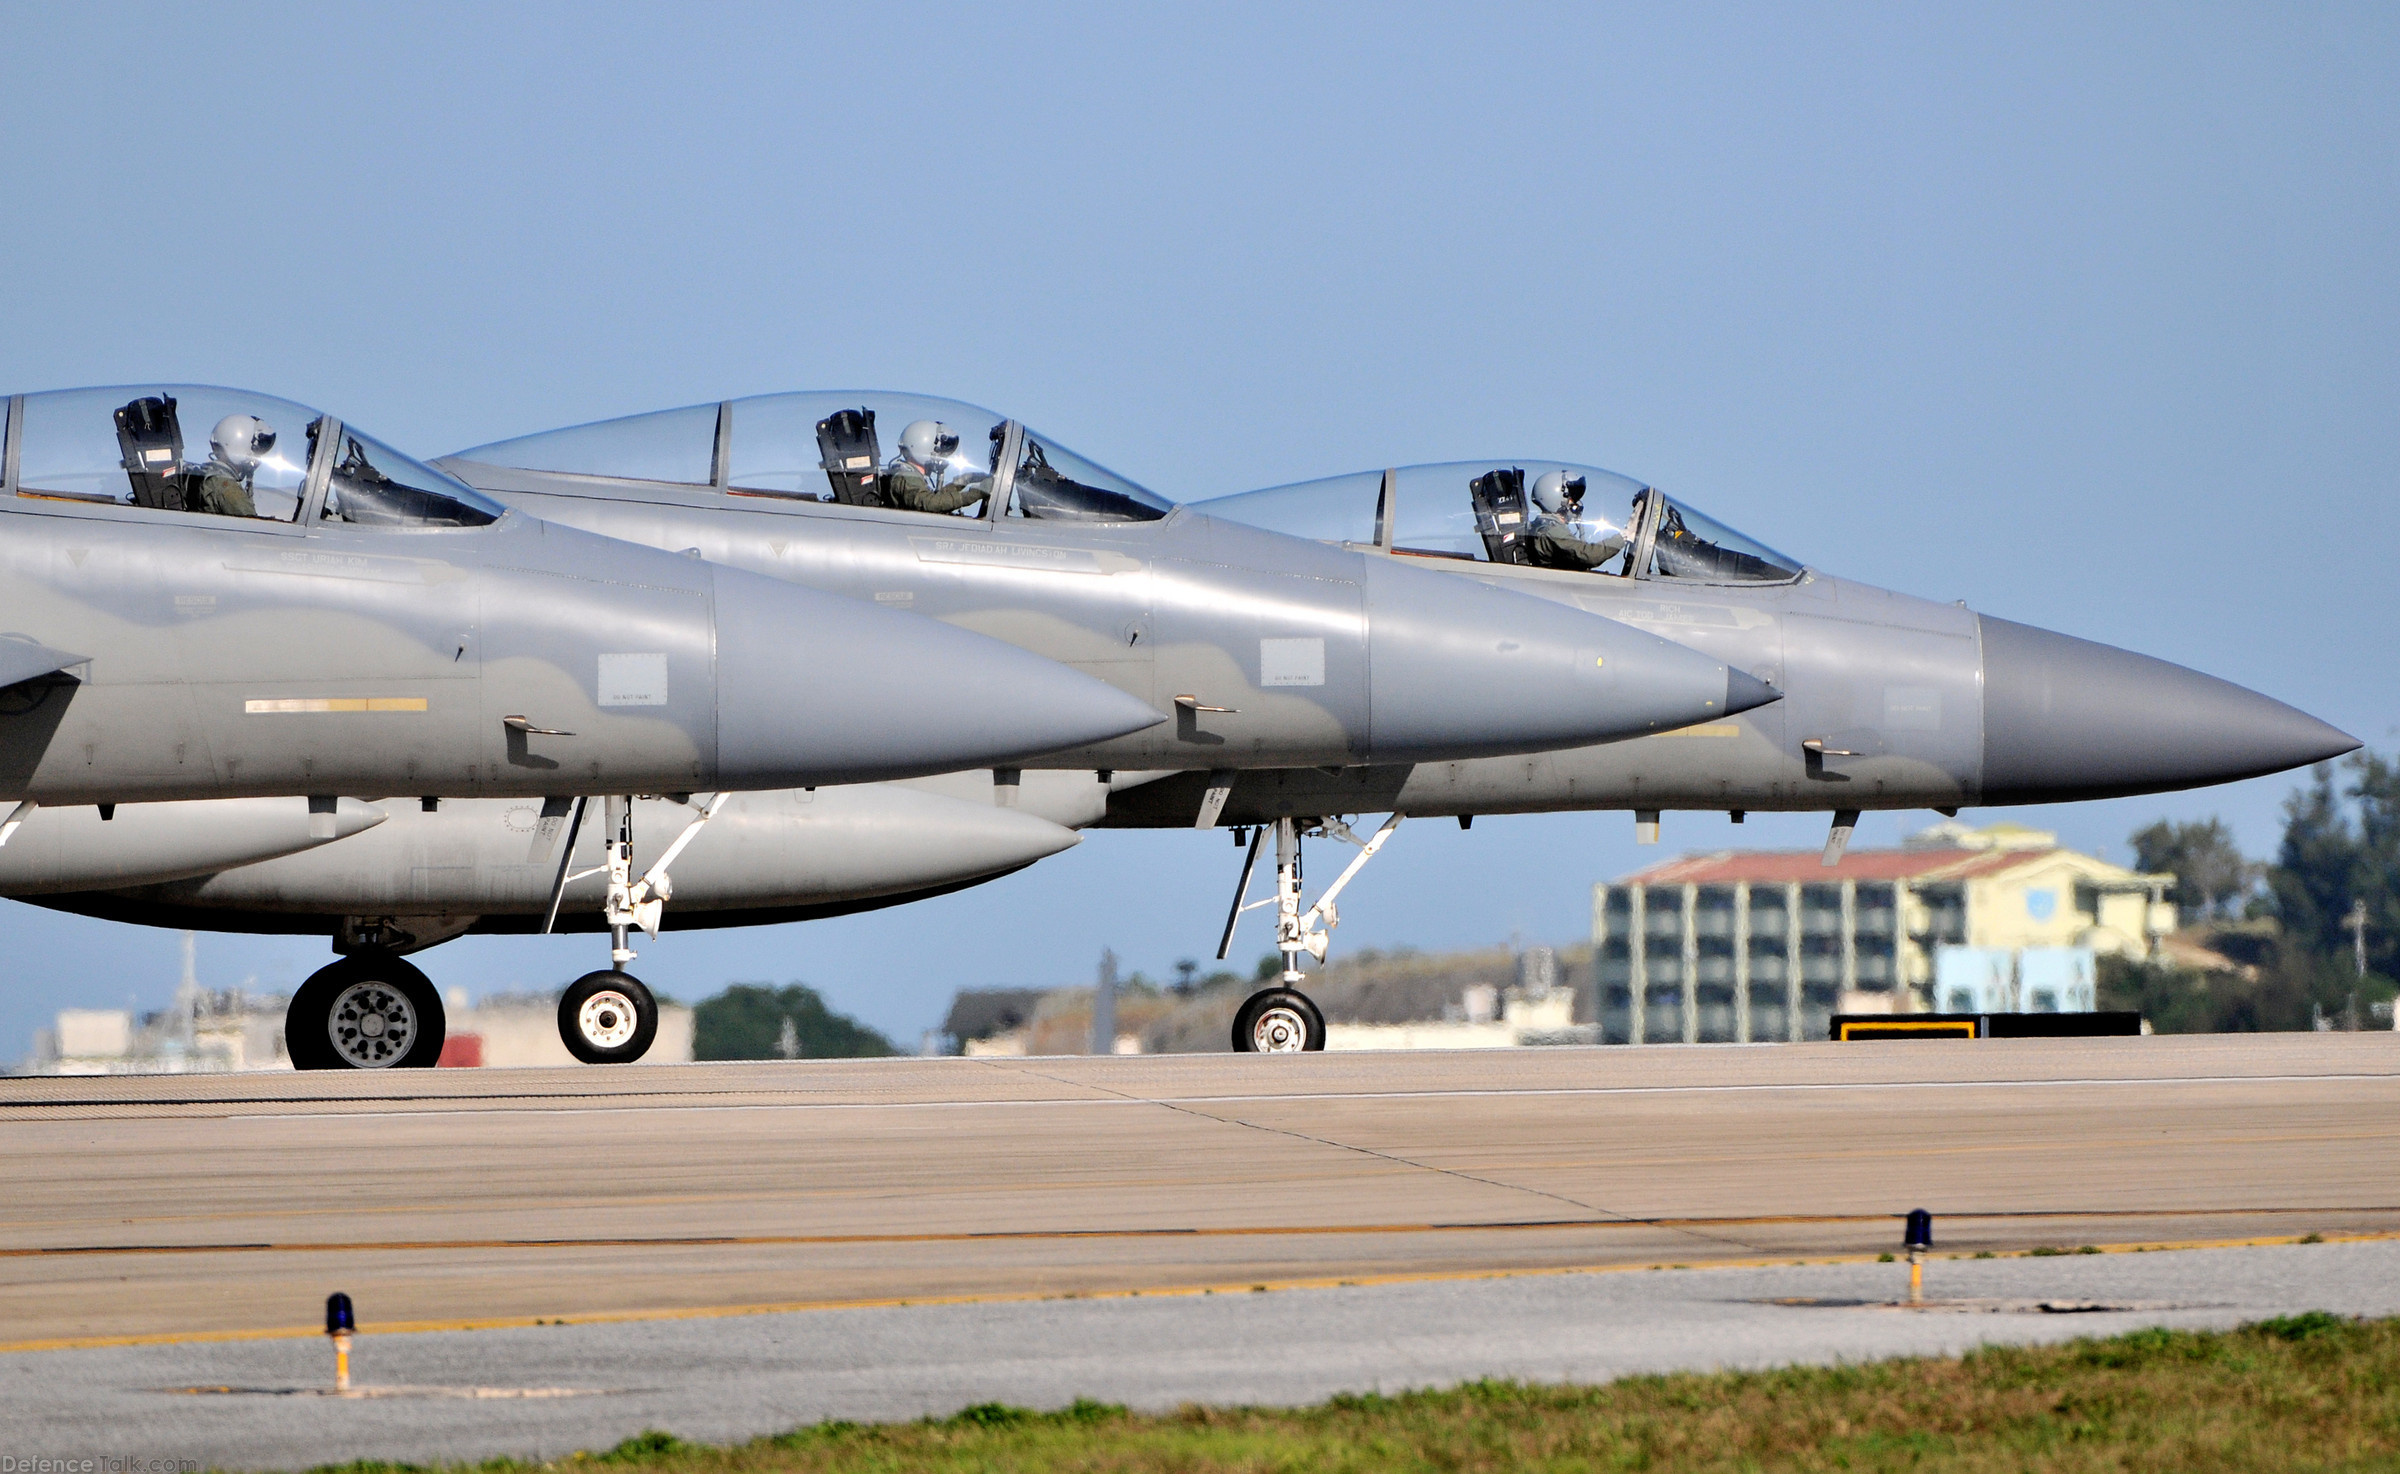 F-15C Pilots - USAF-JASDF Training